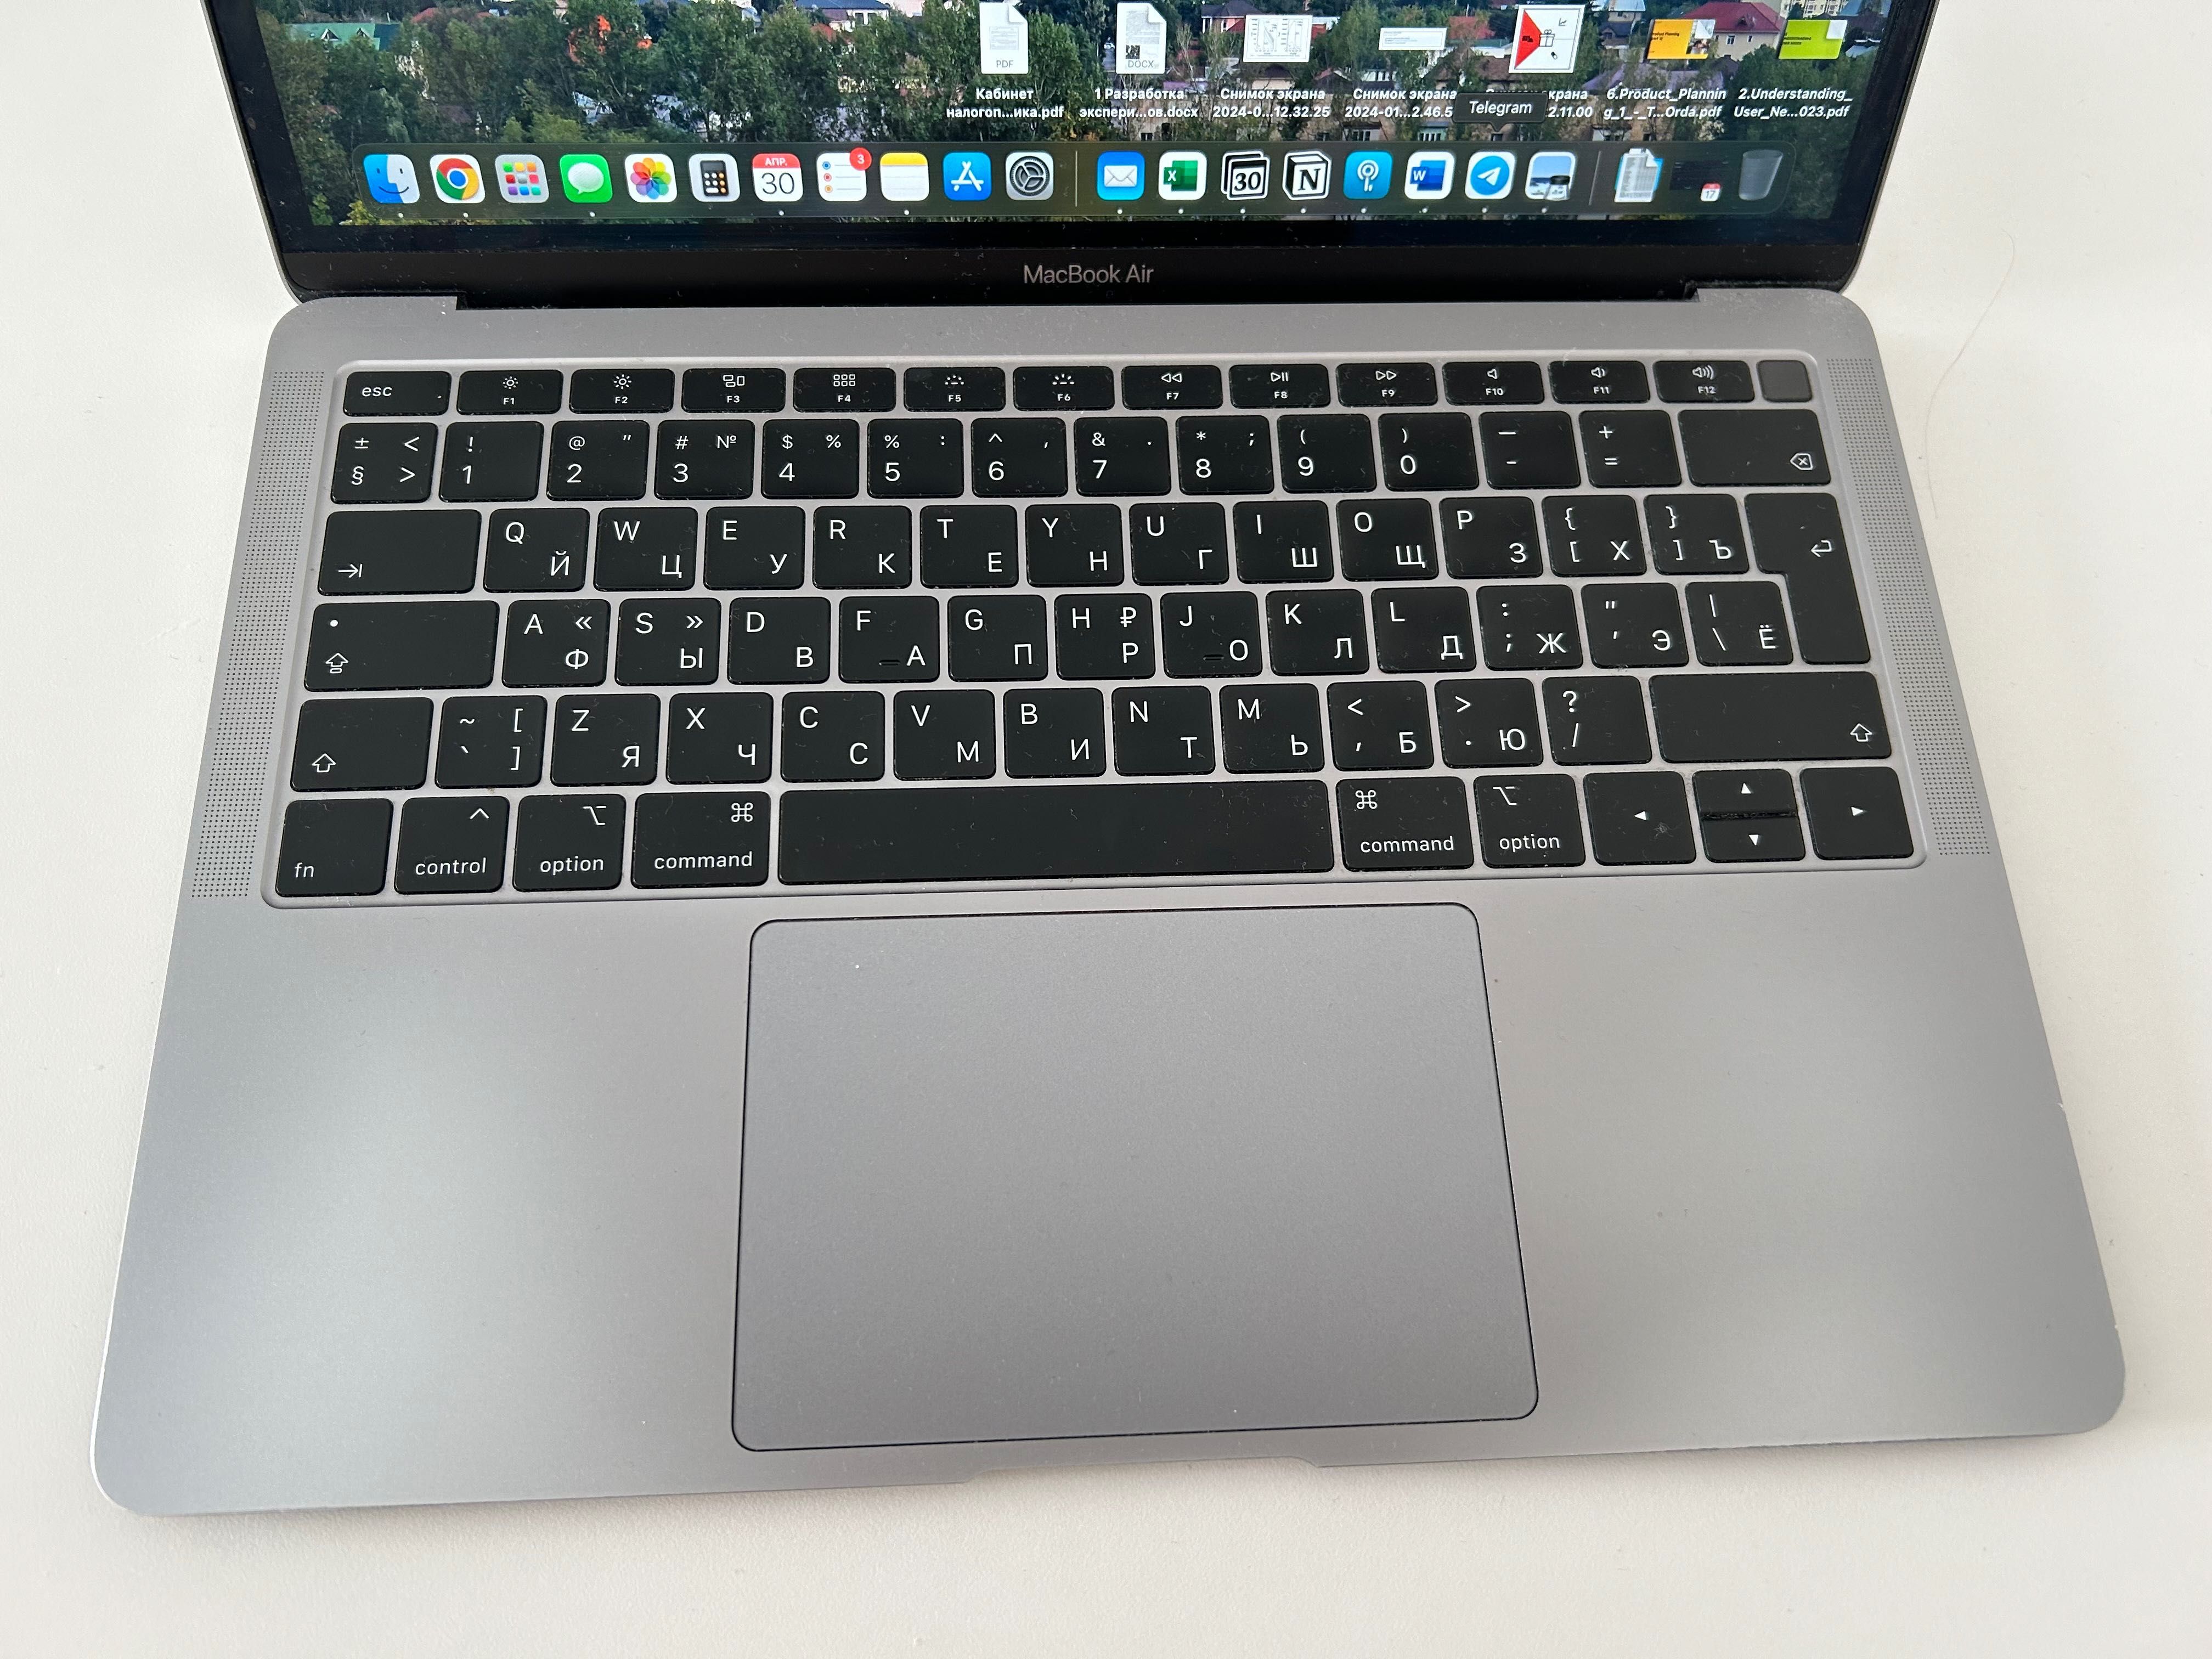 Продам MacBook Air ‘13 2018 года, 128 gb